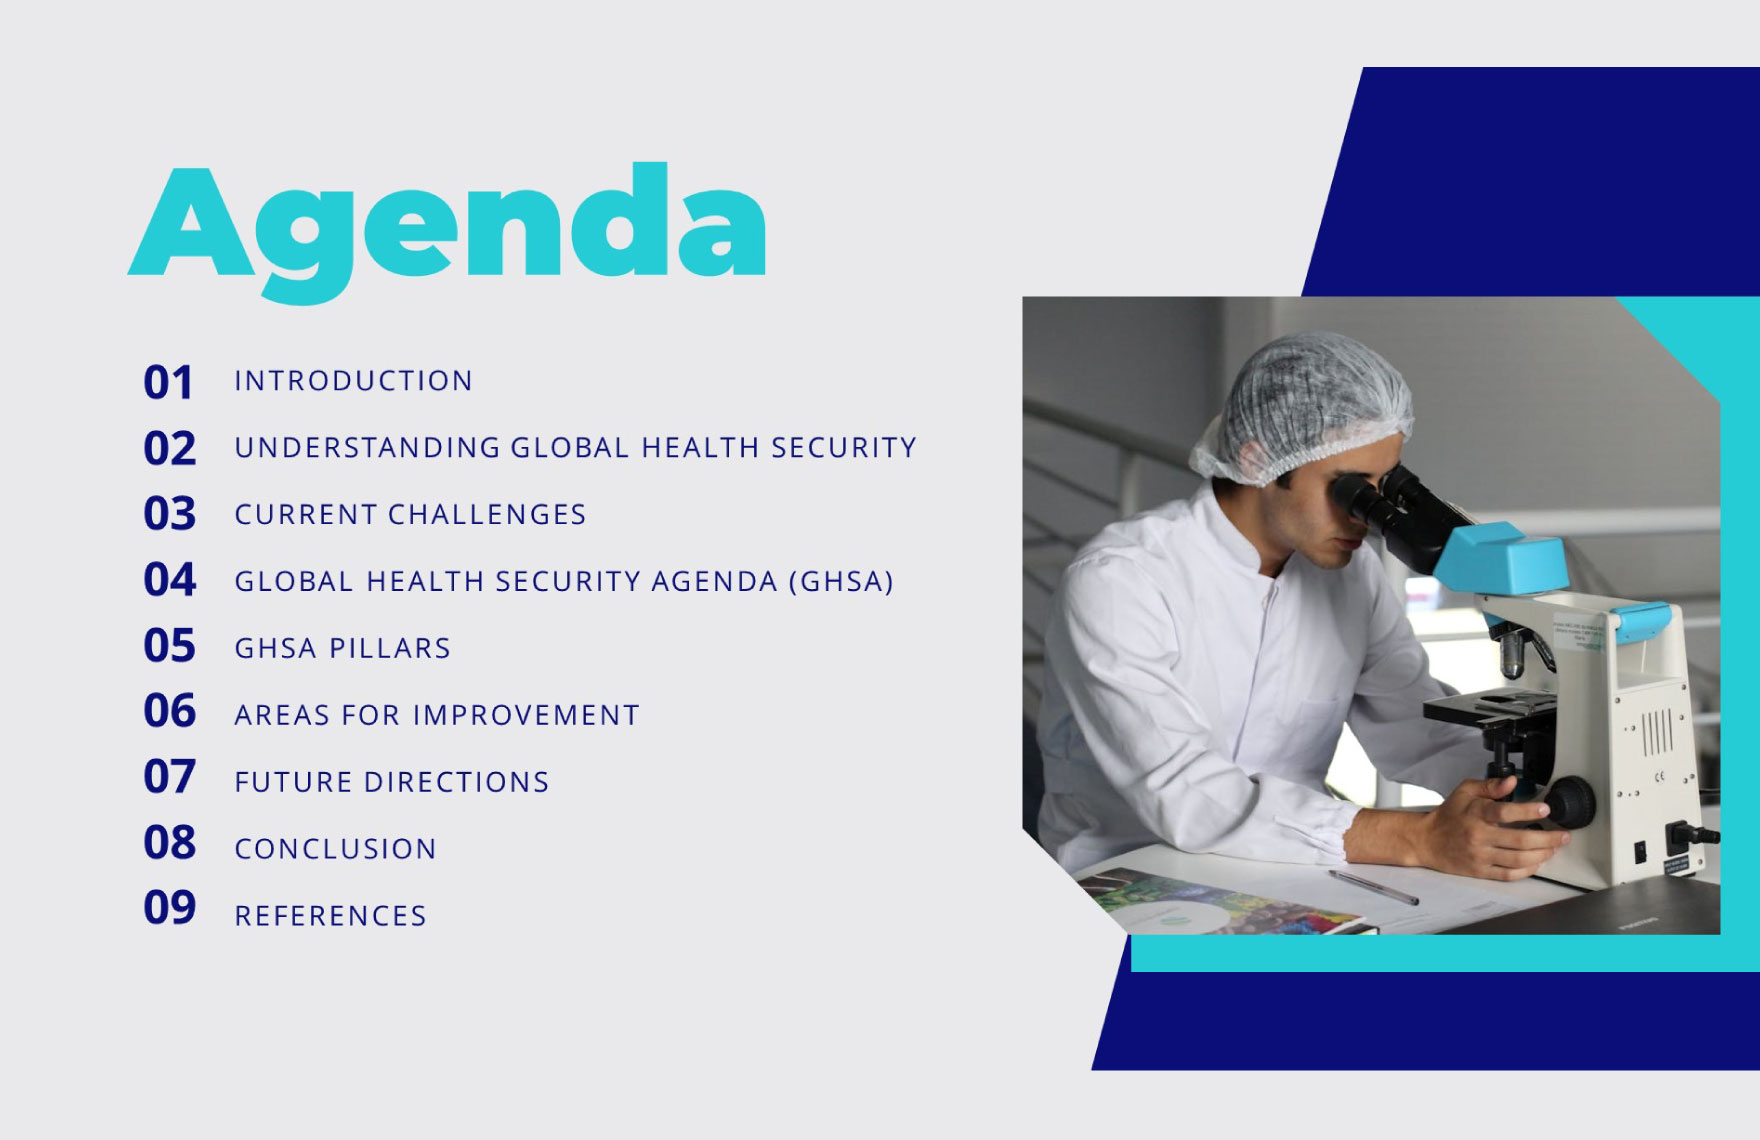 Global Health Security Agenda Template